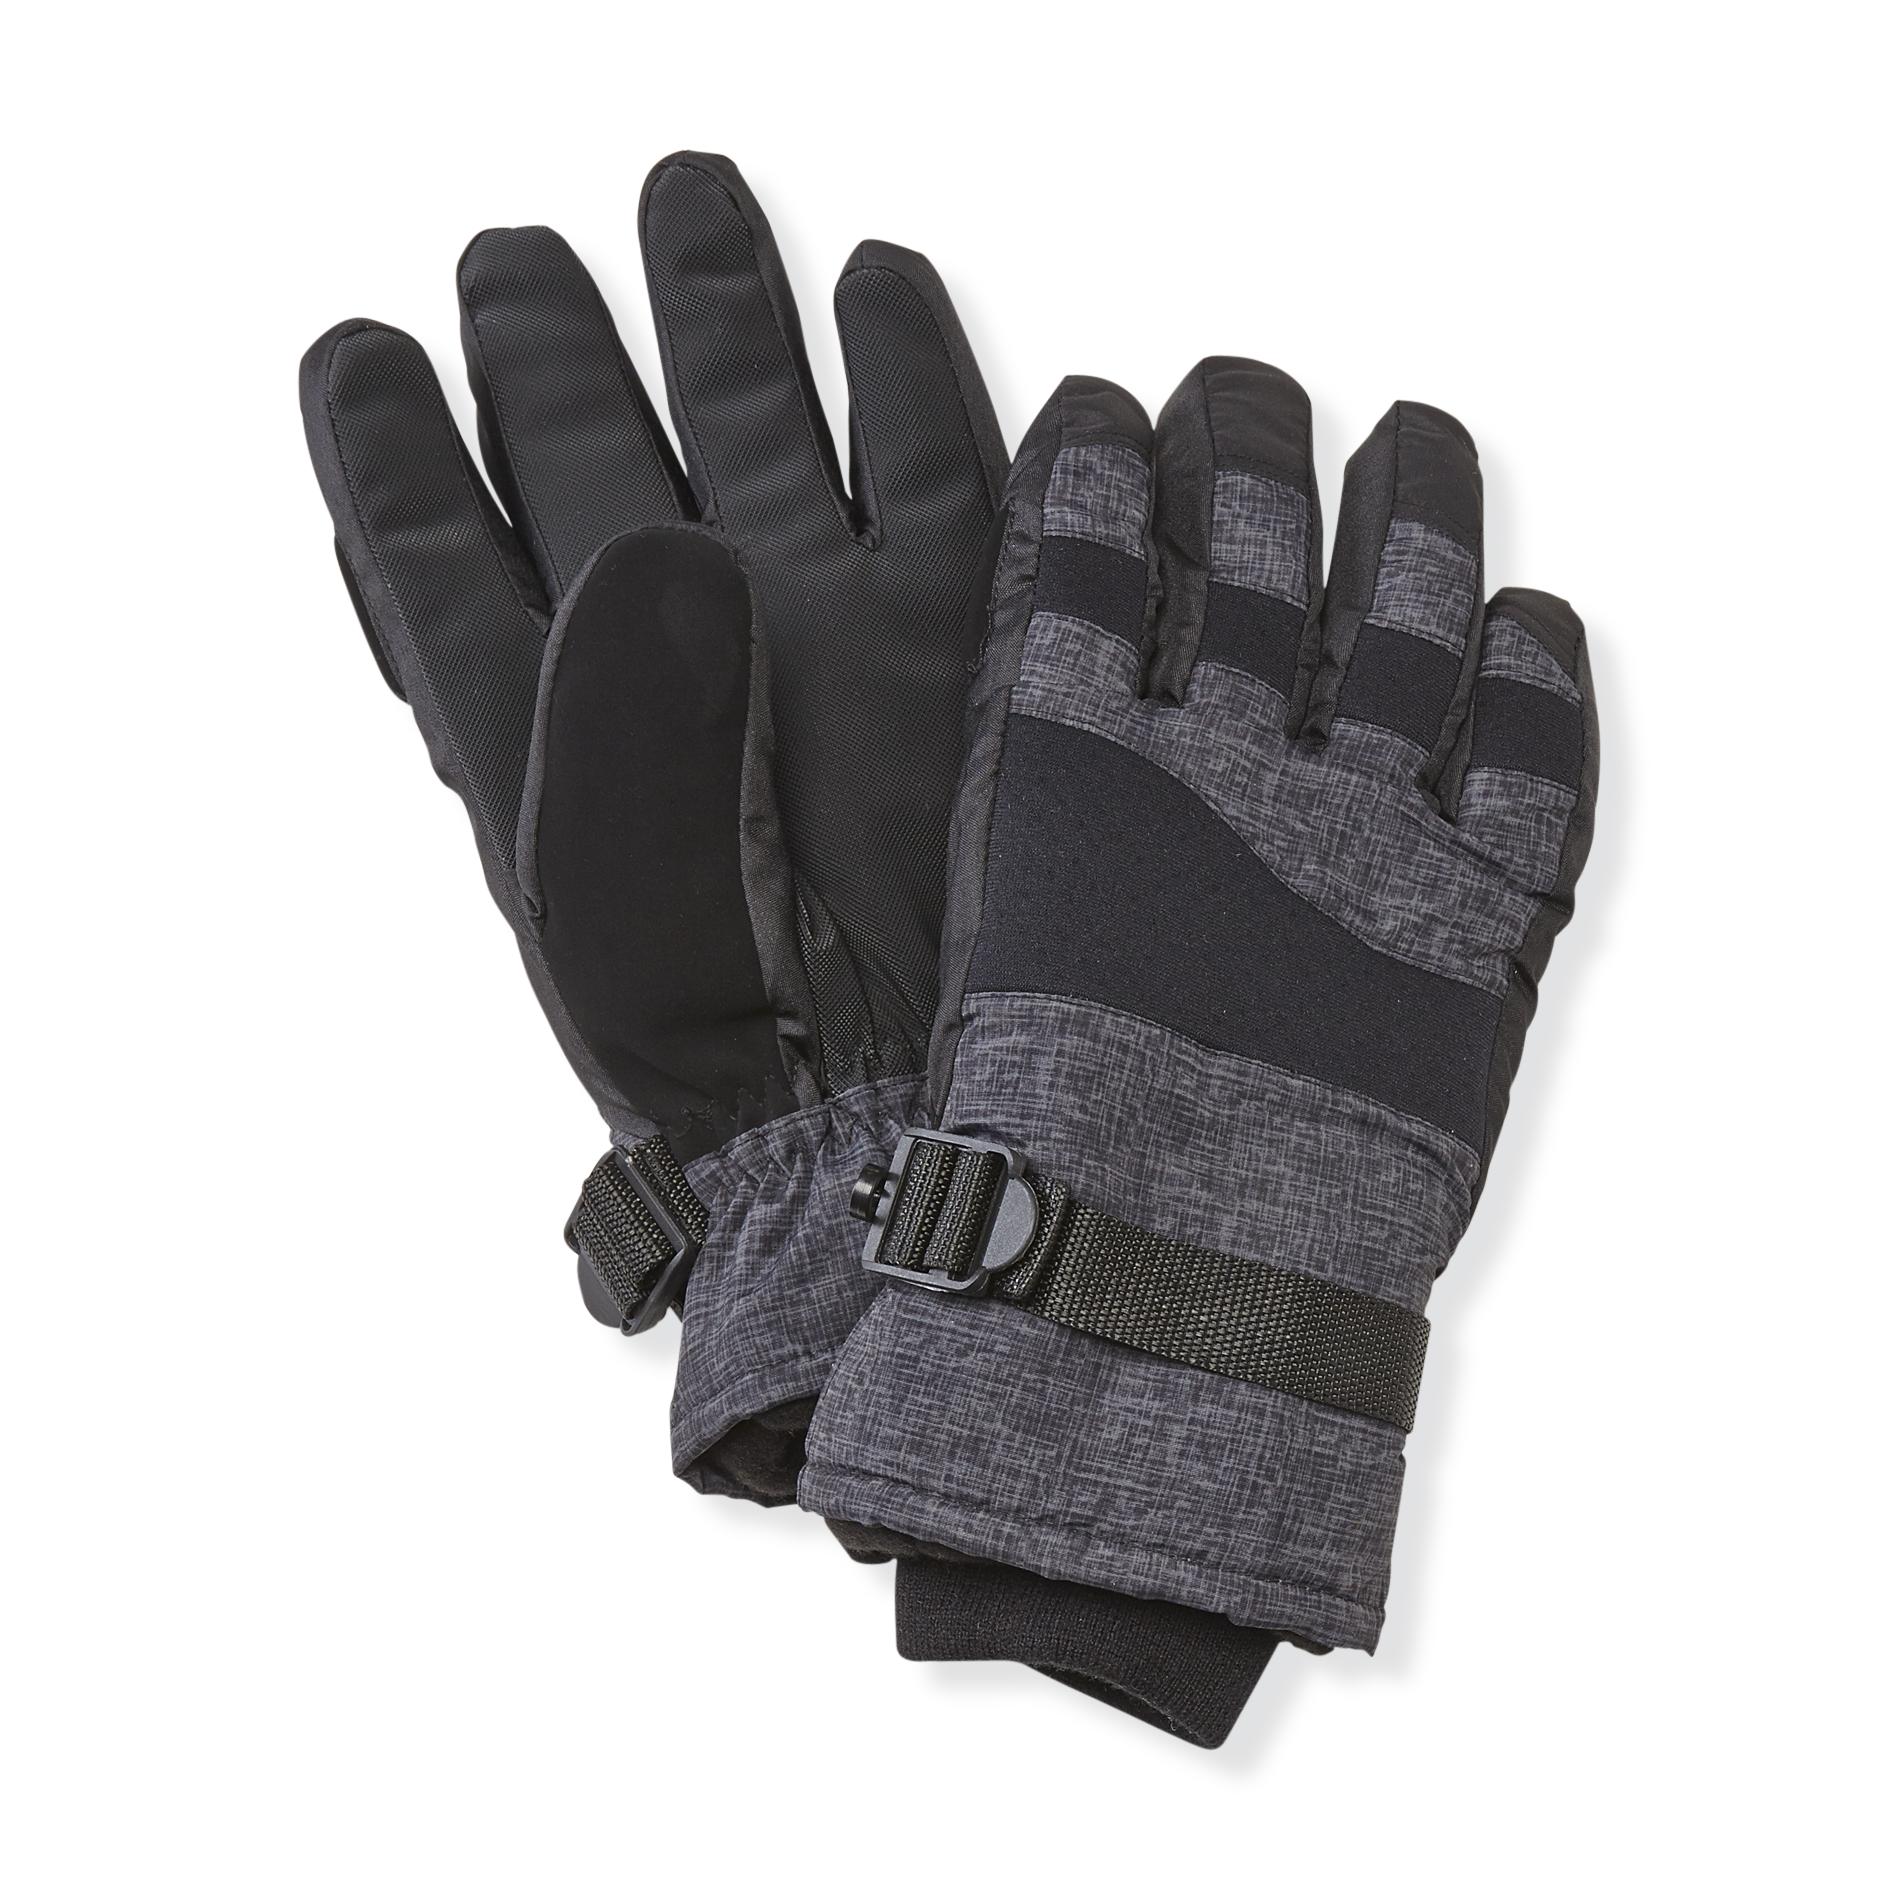 Athletech Men's Fleece-Lined Ski Gloves - Crosshatch Pattern